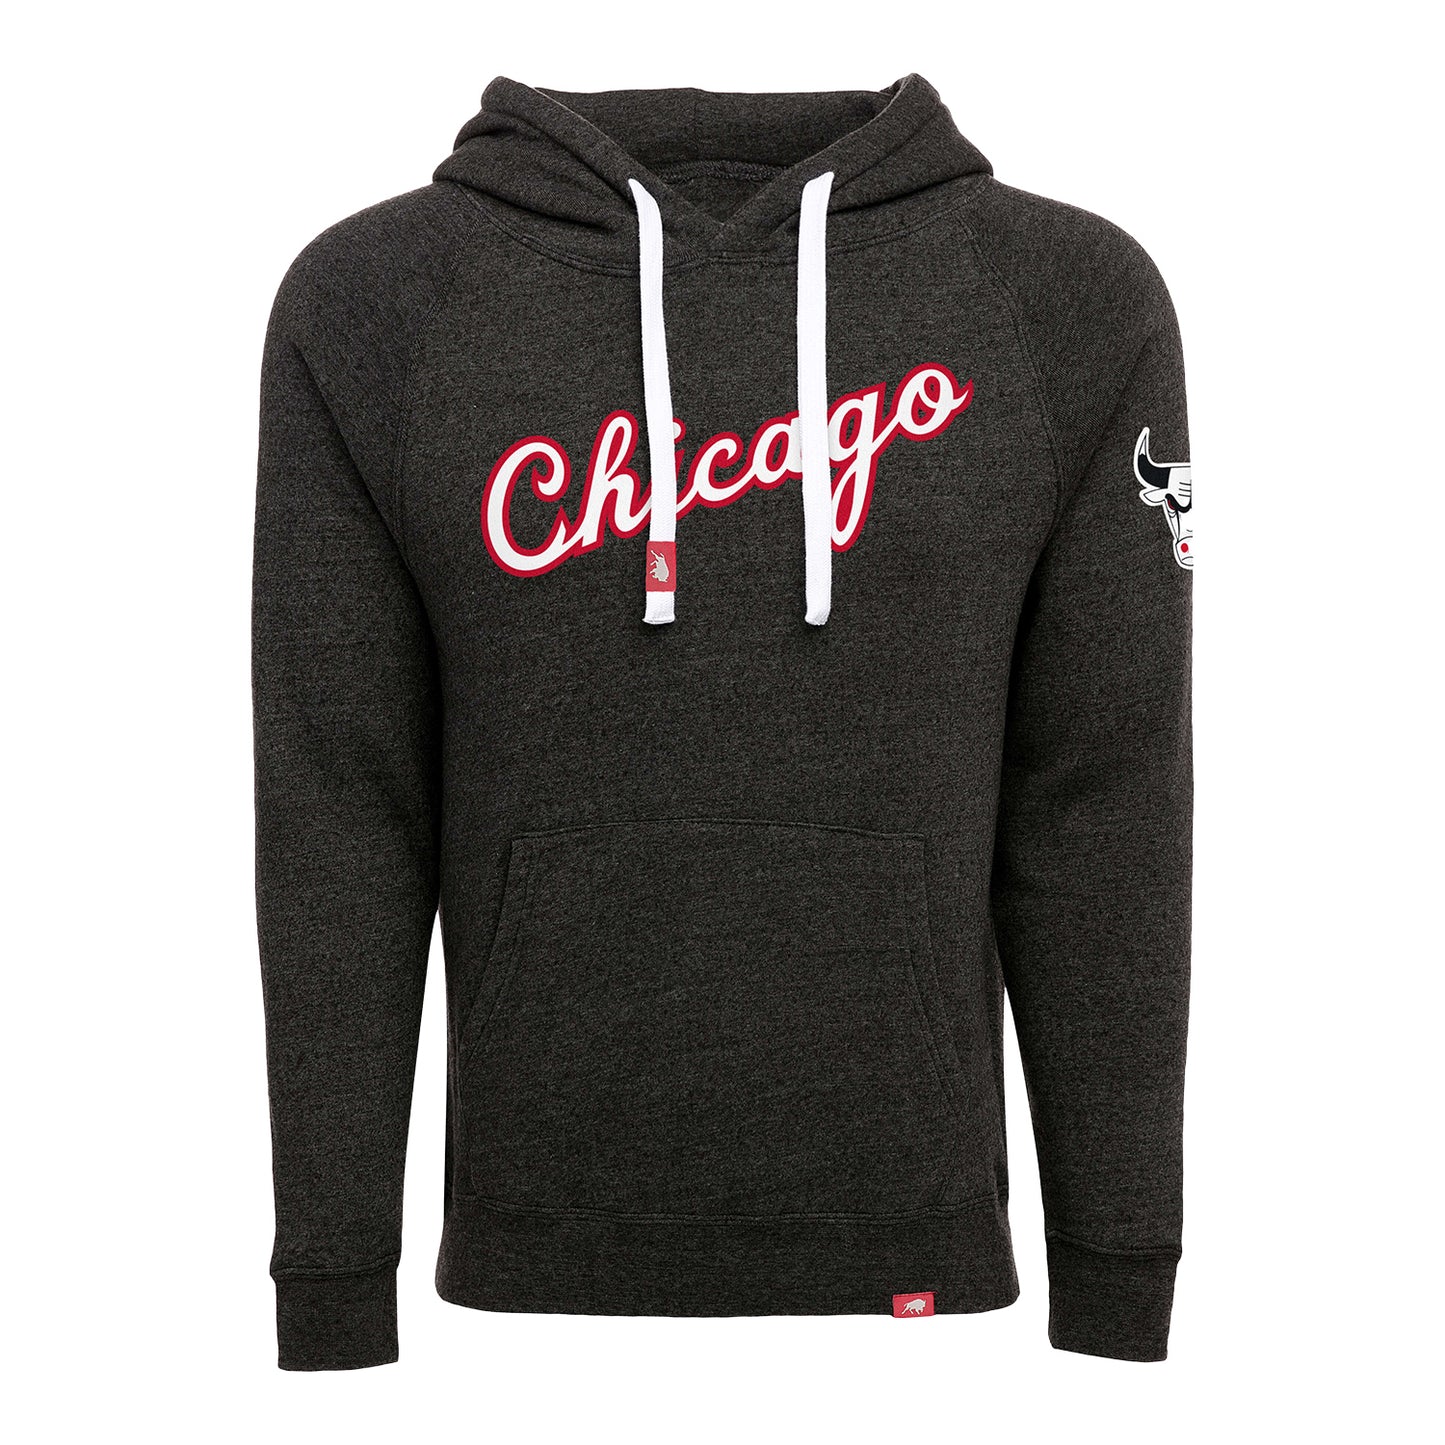 Chicago Bulls Sportiqe Olsen Script Black Hooded Sweatshirt - front view